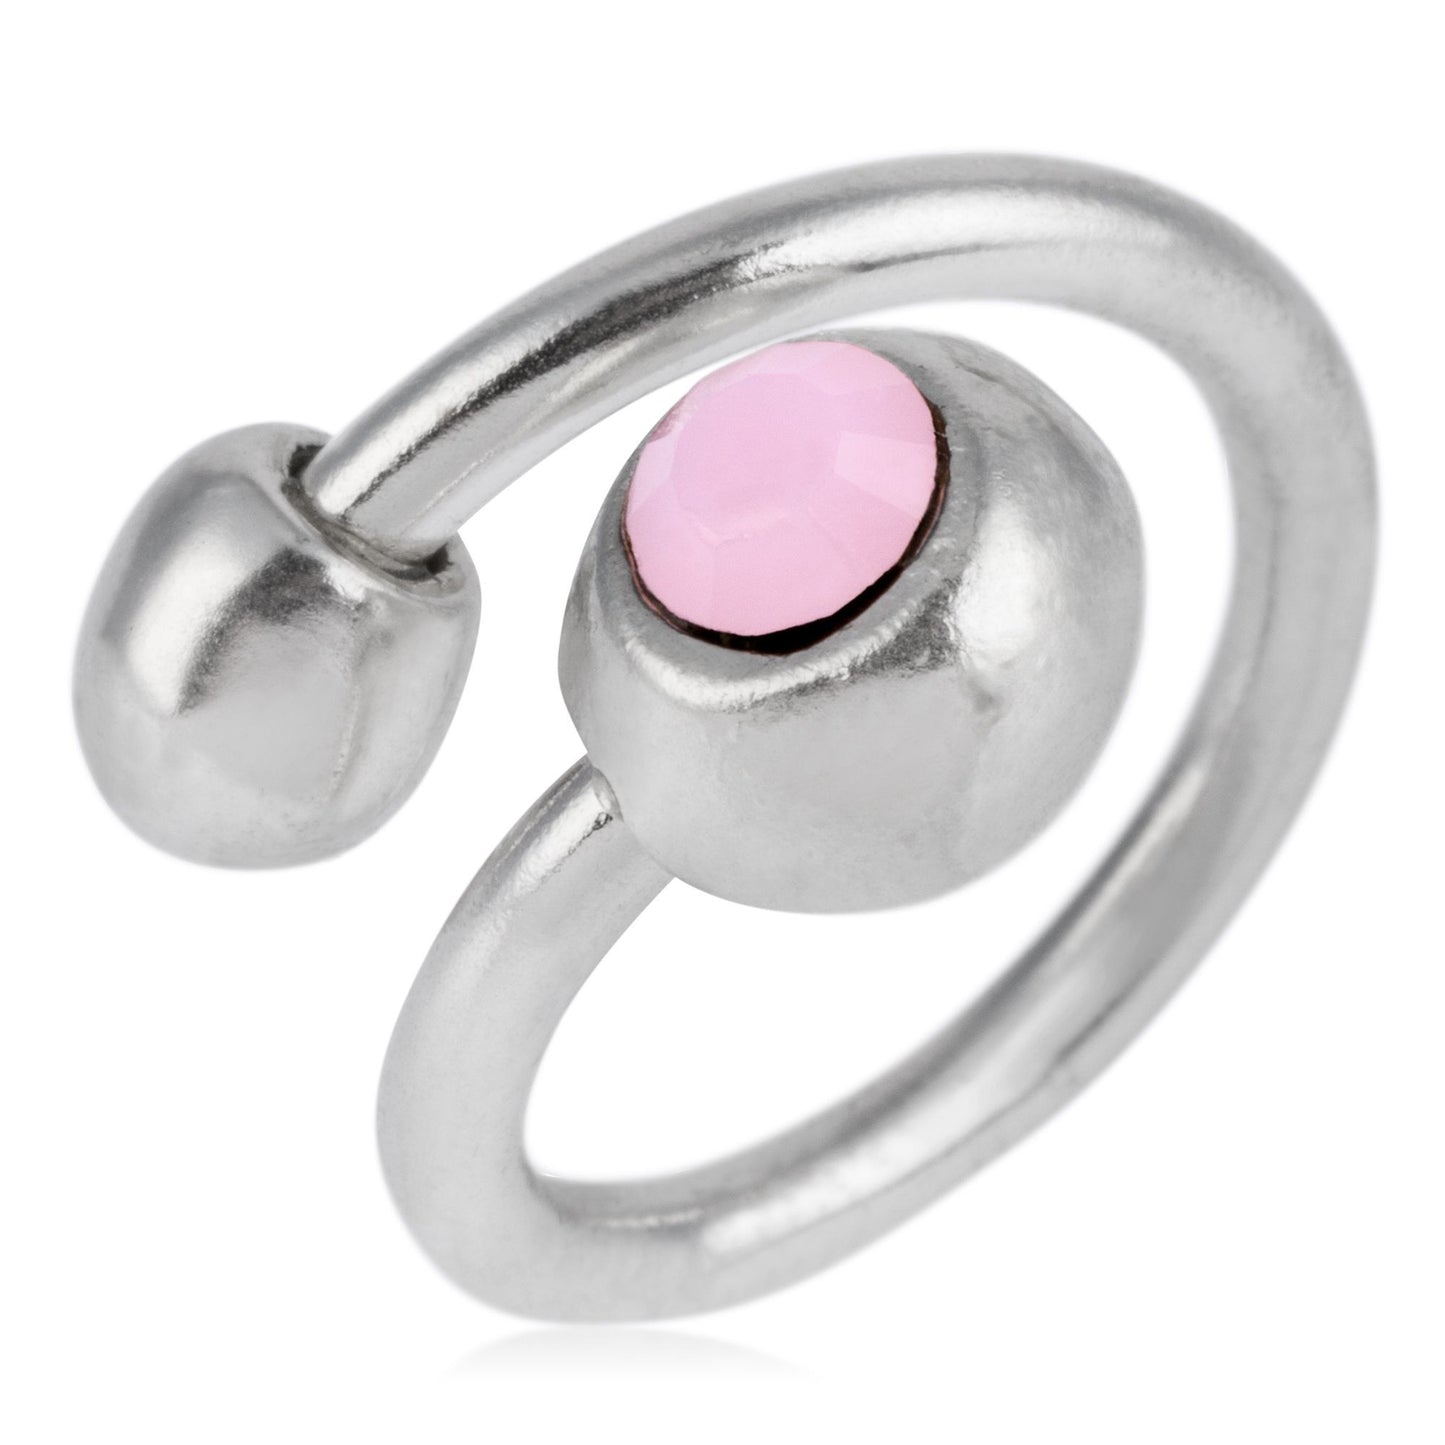 Pale pink Swarovski plated 925 silver ring